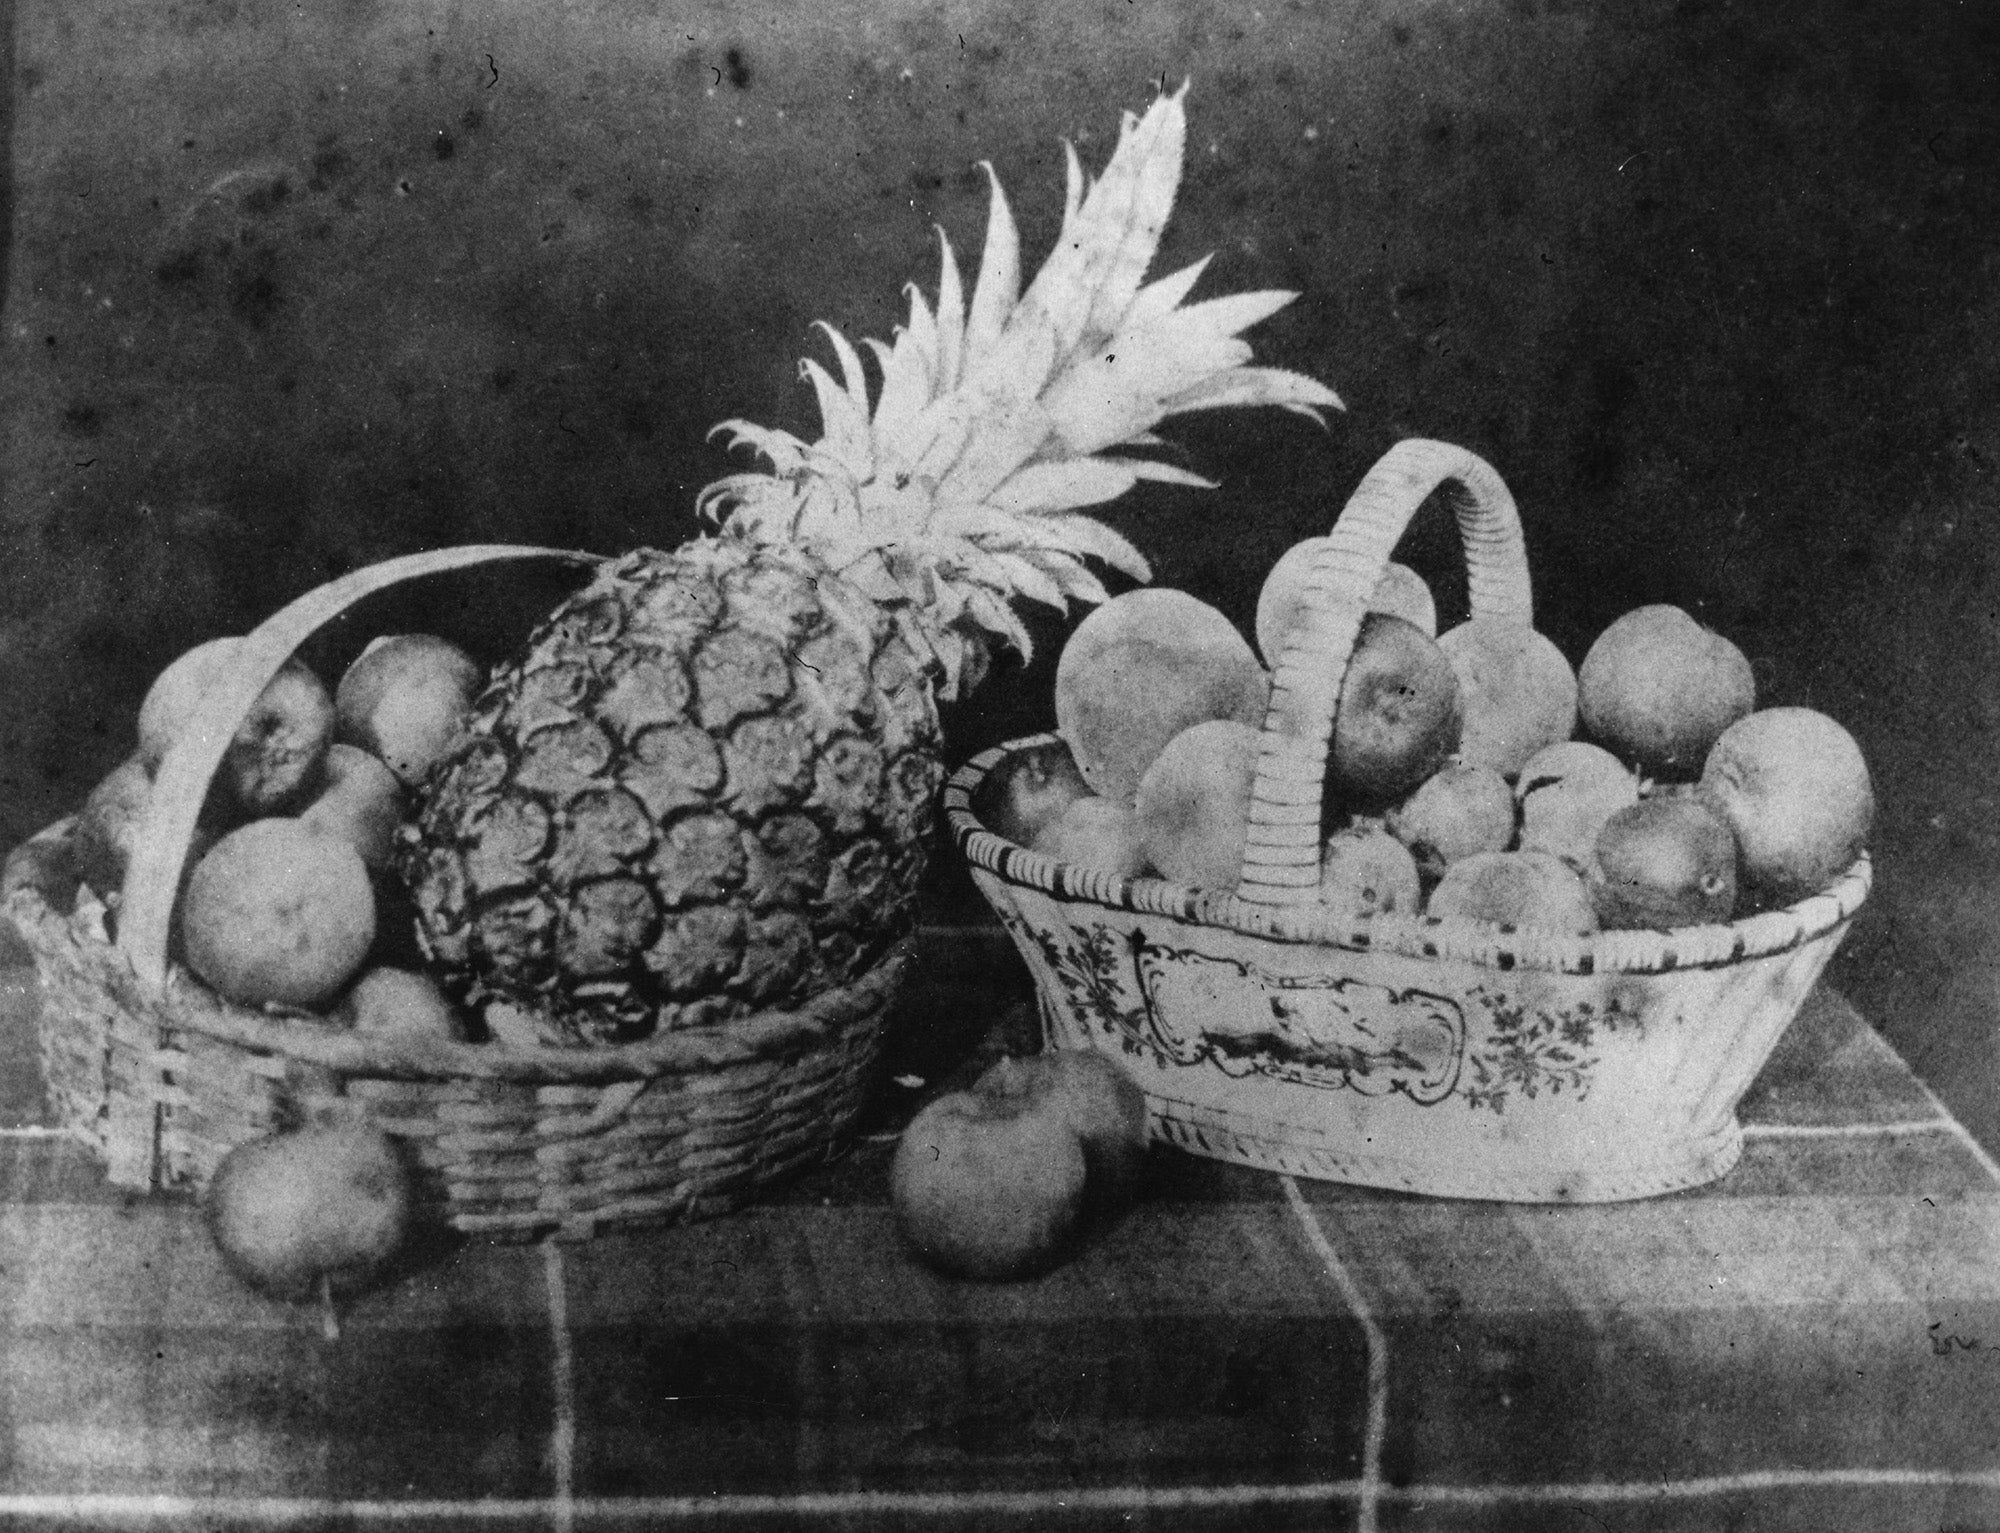 A still life of fruit by William Henry Fox Talbot, 1844